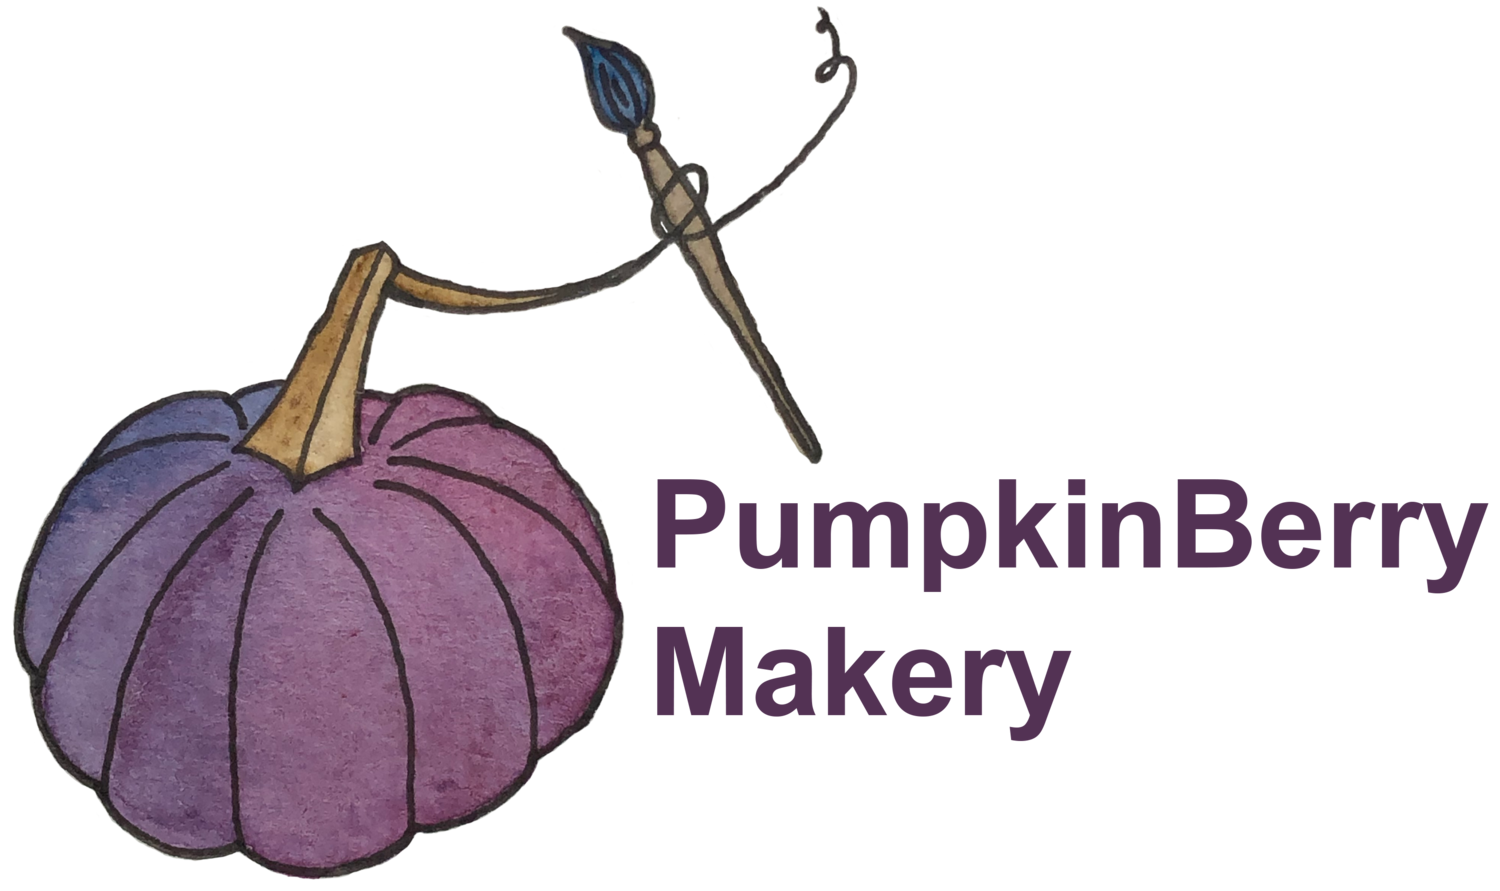 PumpkinBerry Makery